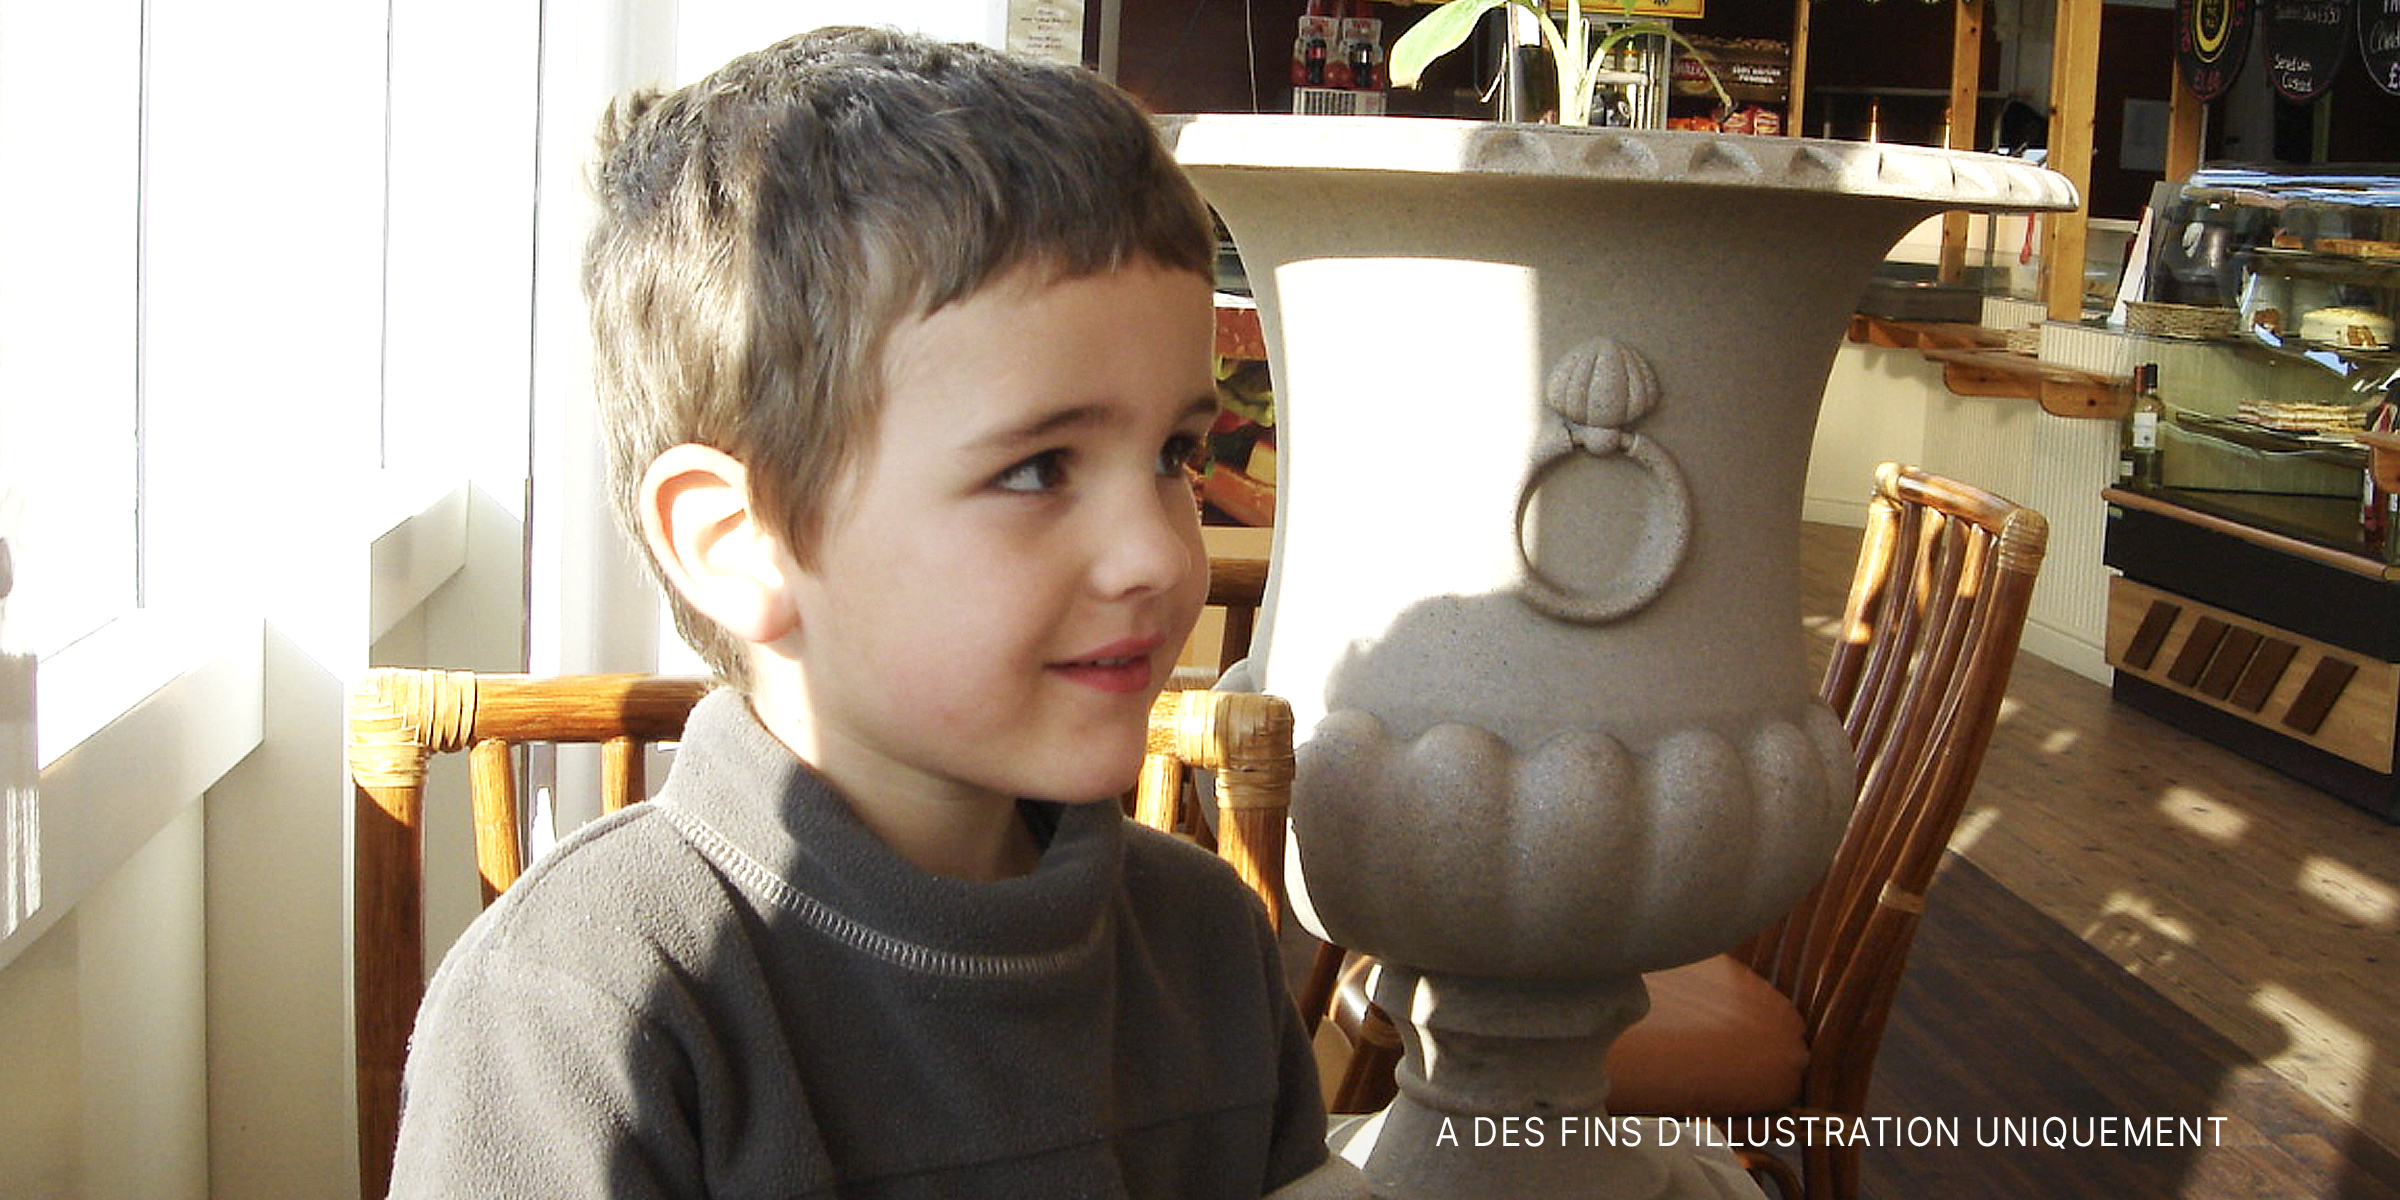 Petit garçon dans un café | Source : Shutterstock